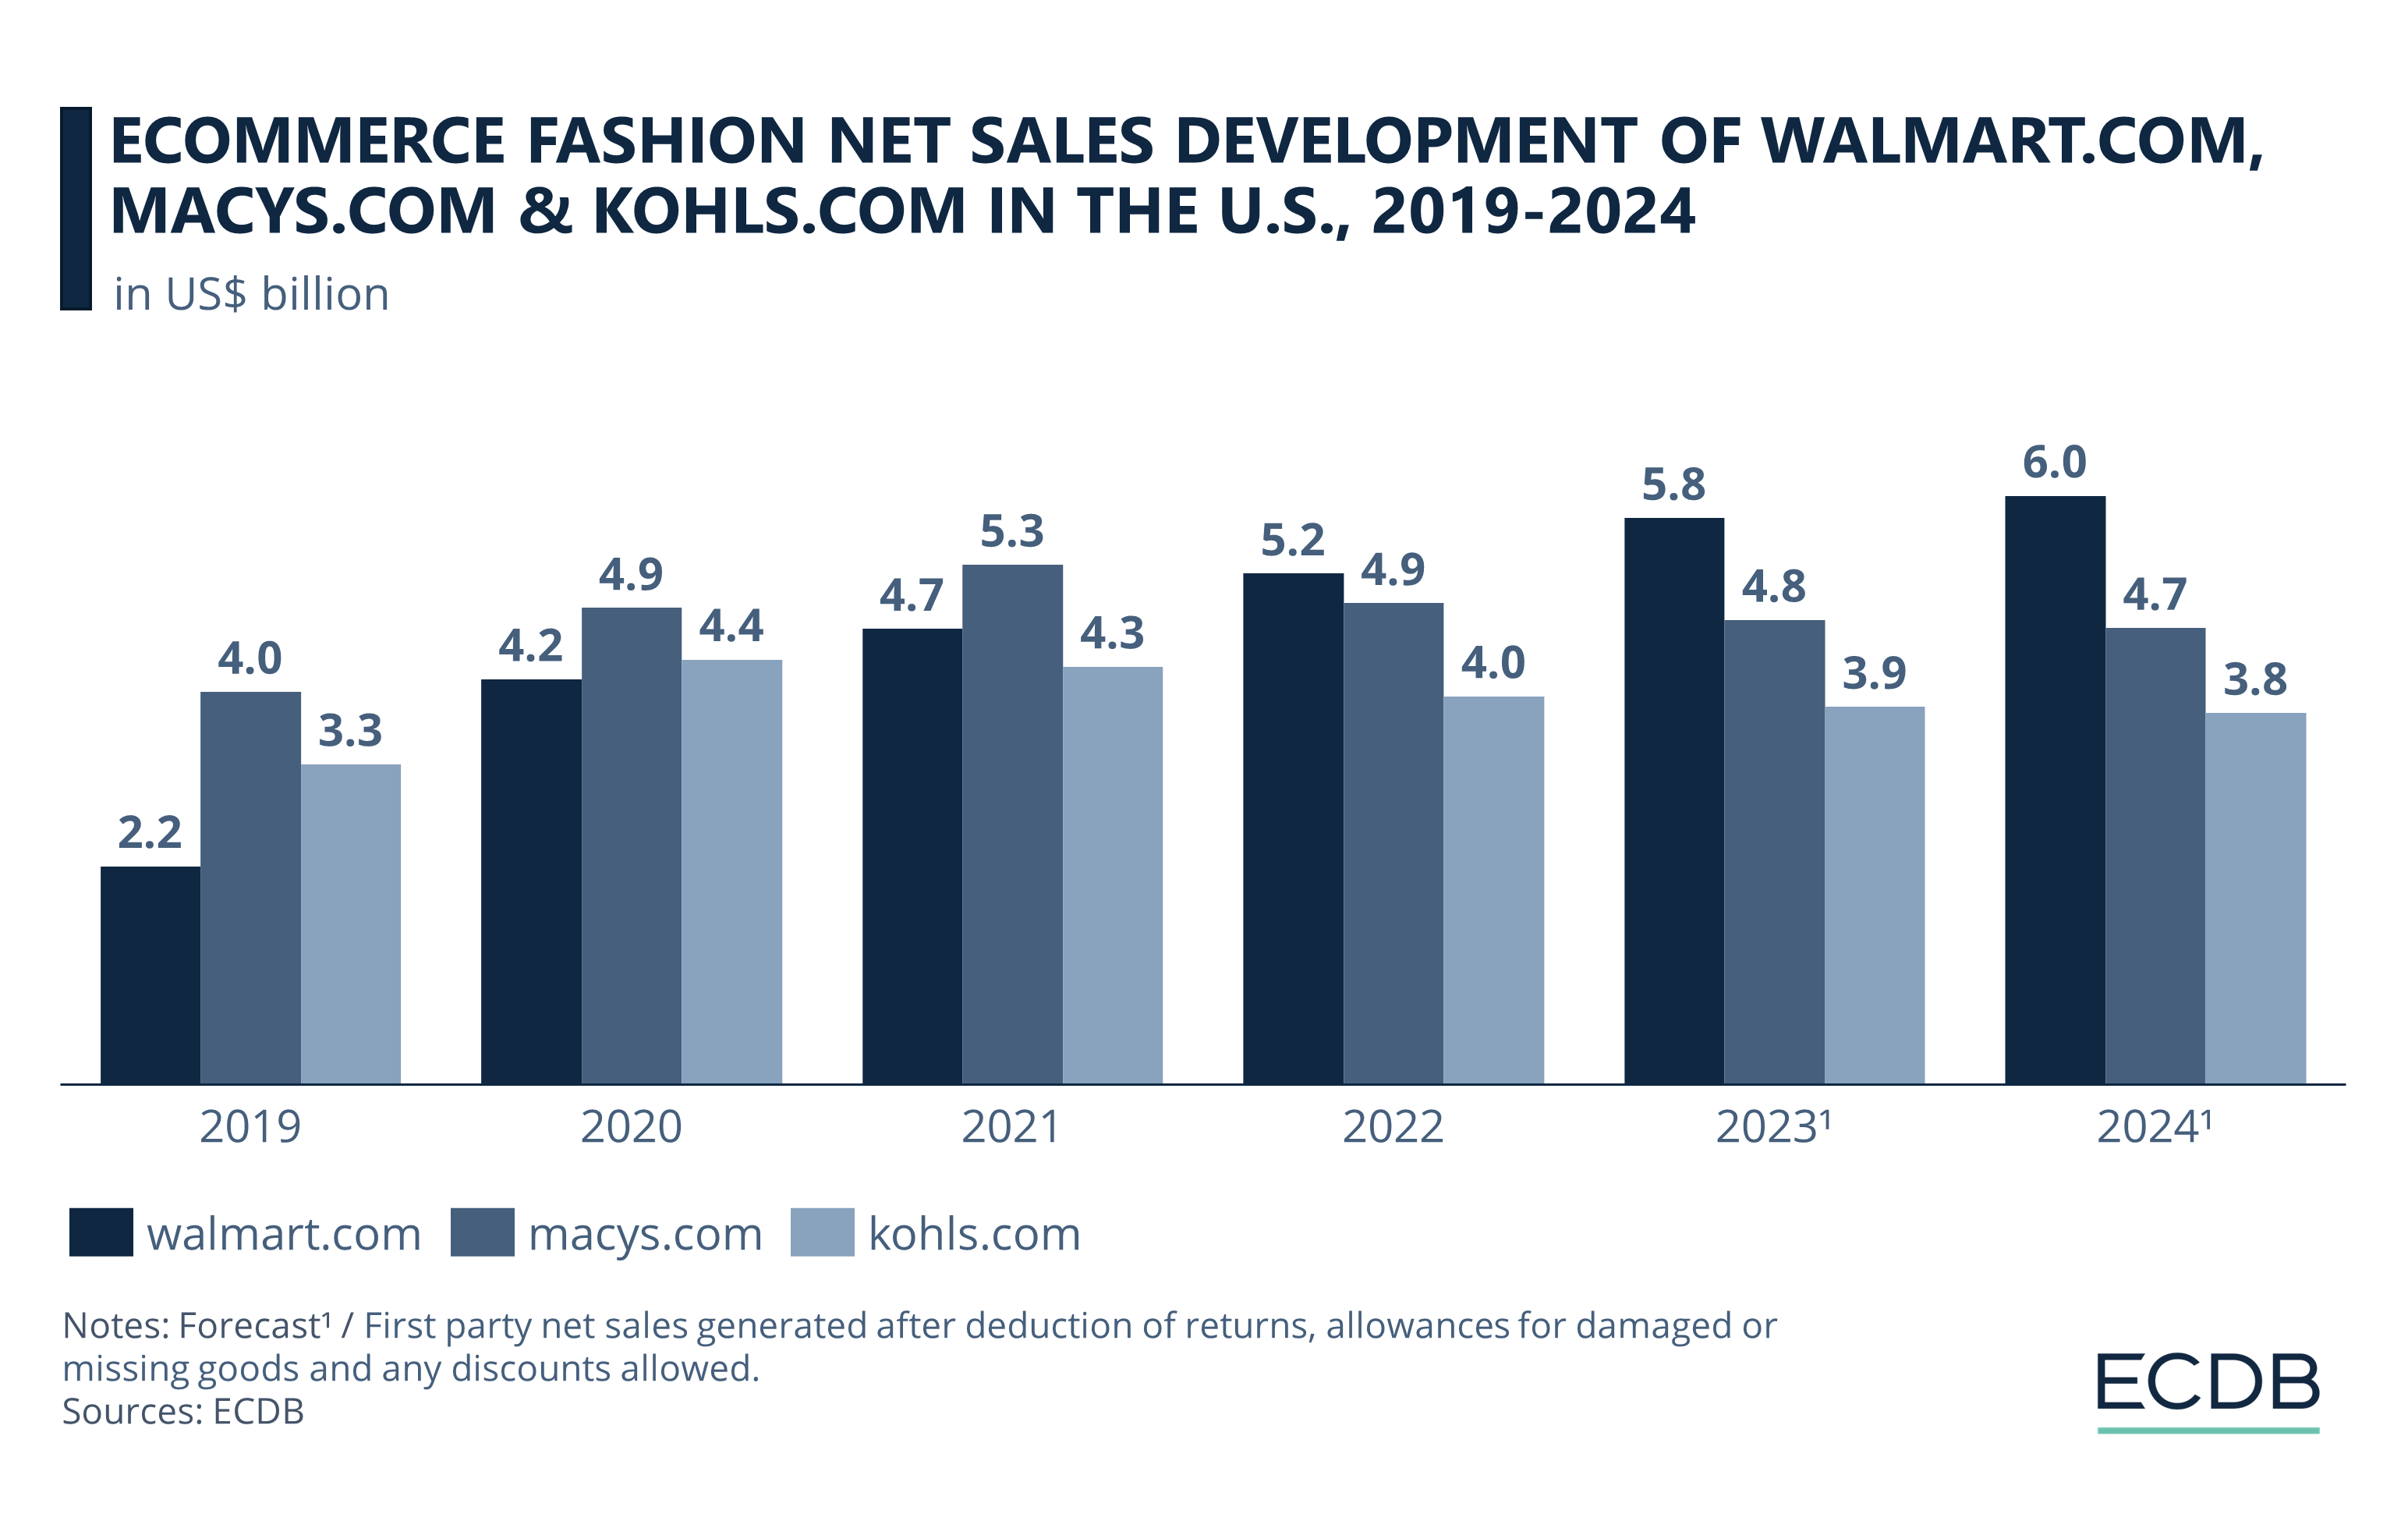 eCommerce Fashion Net Sales in the U.S. of Walmart.com, Macys.com & Kohls